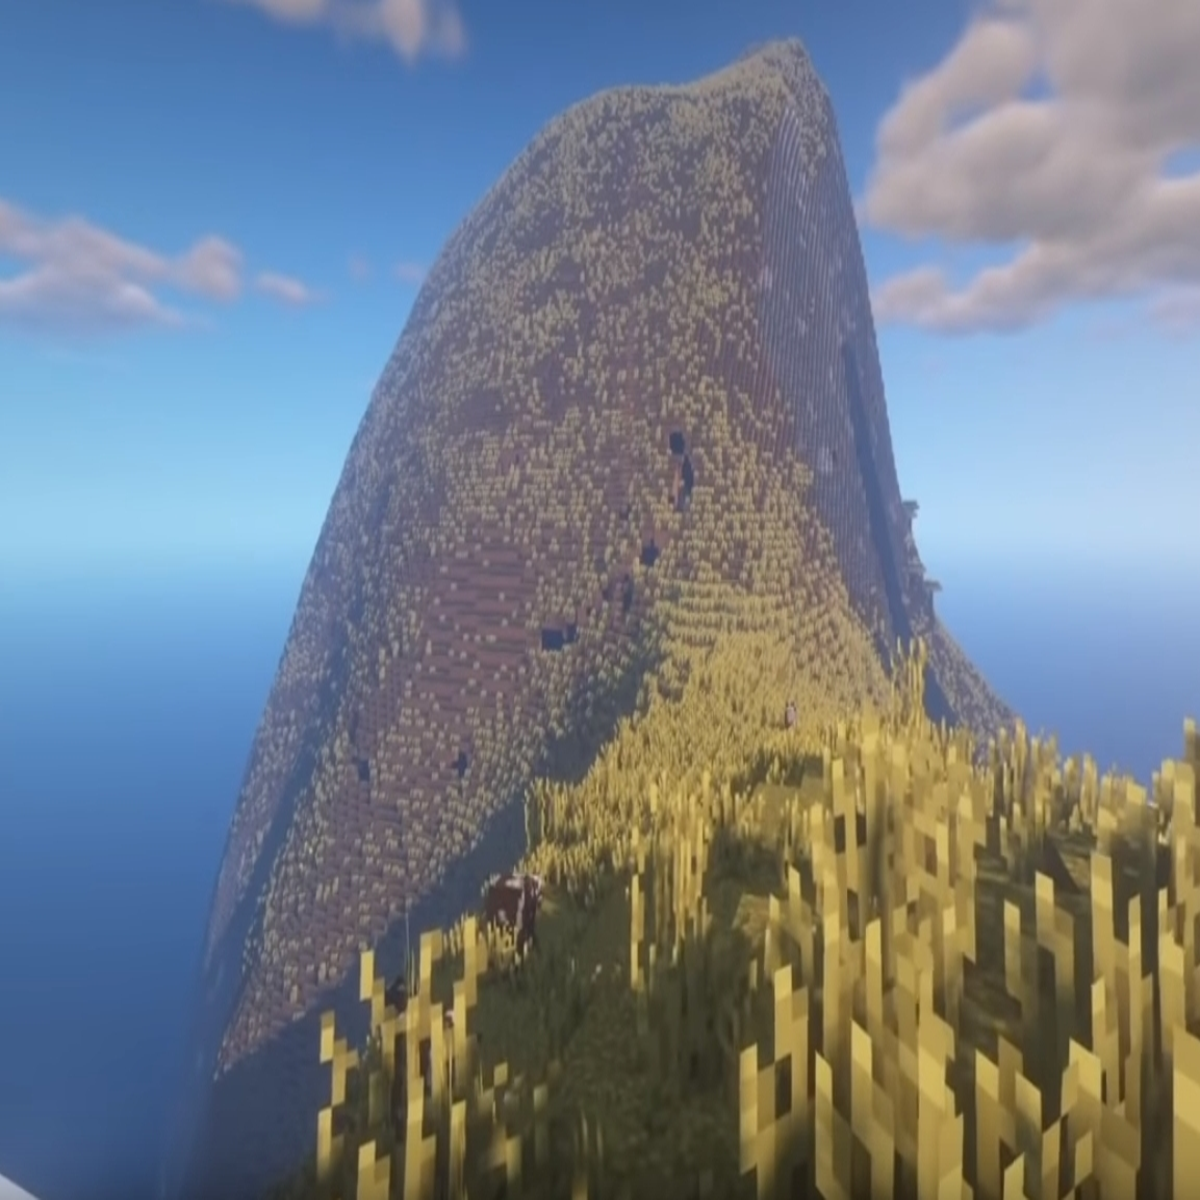 Minecraft Scale Version Of The Earth Is Slowly Taking Shape - SlashGear